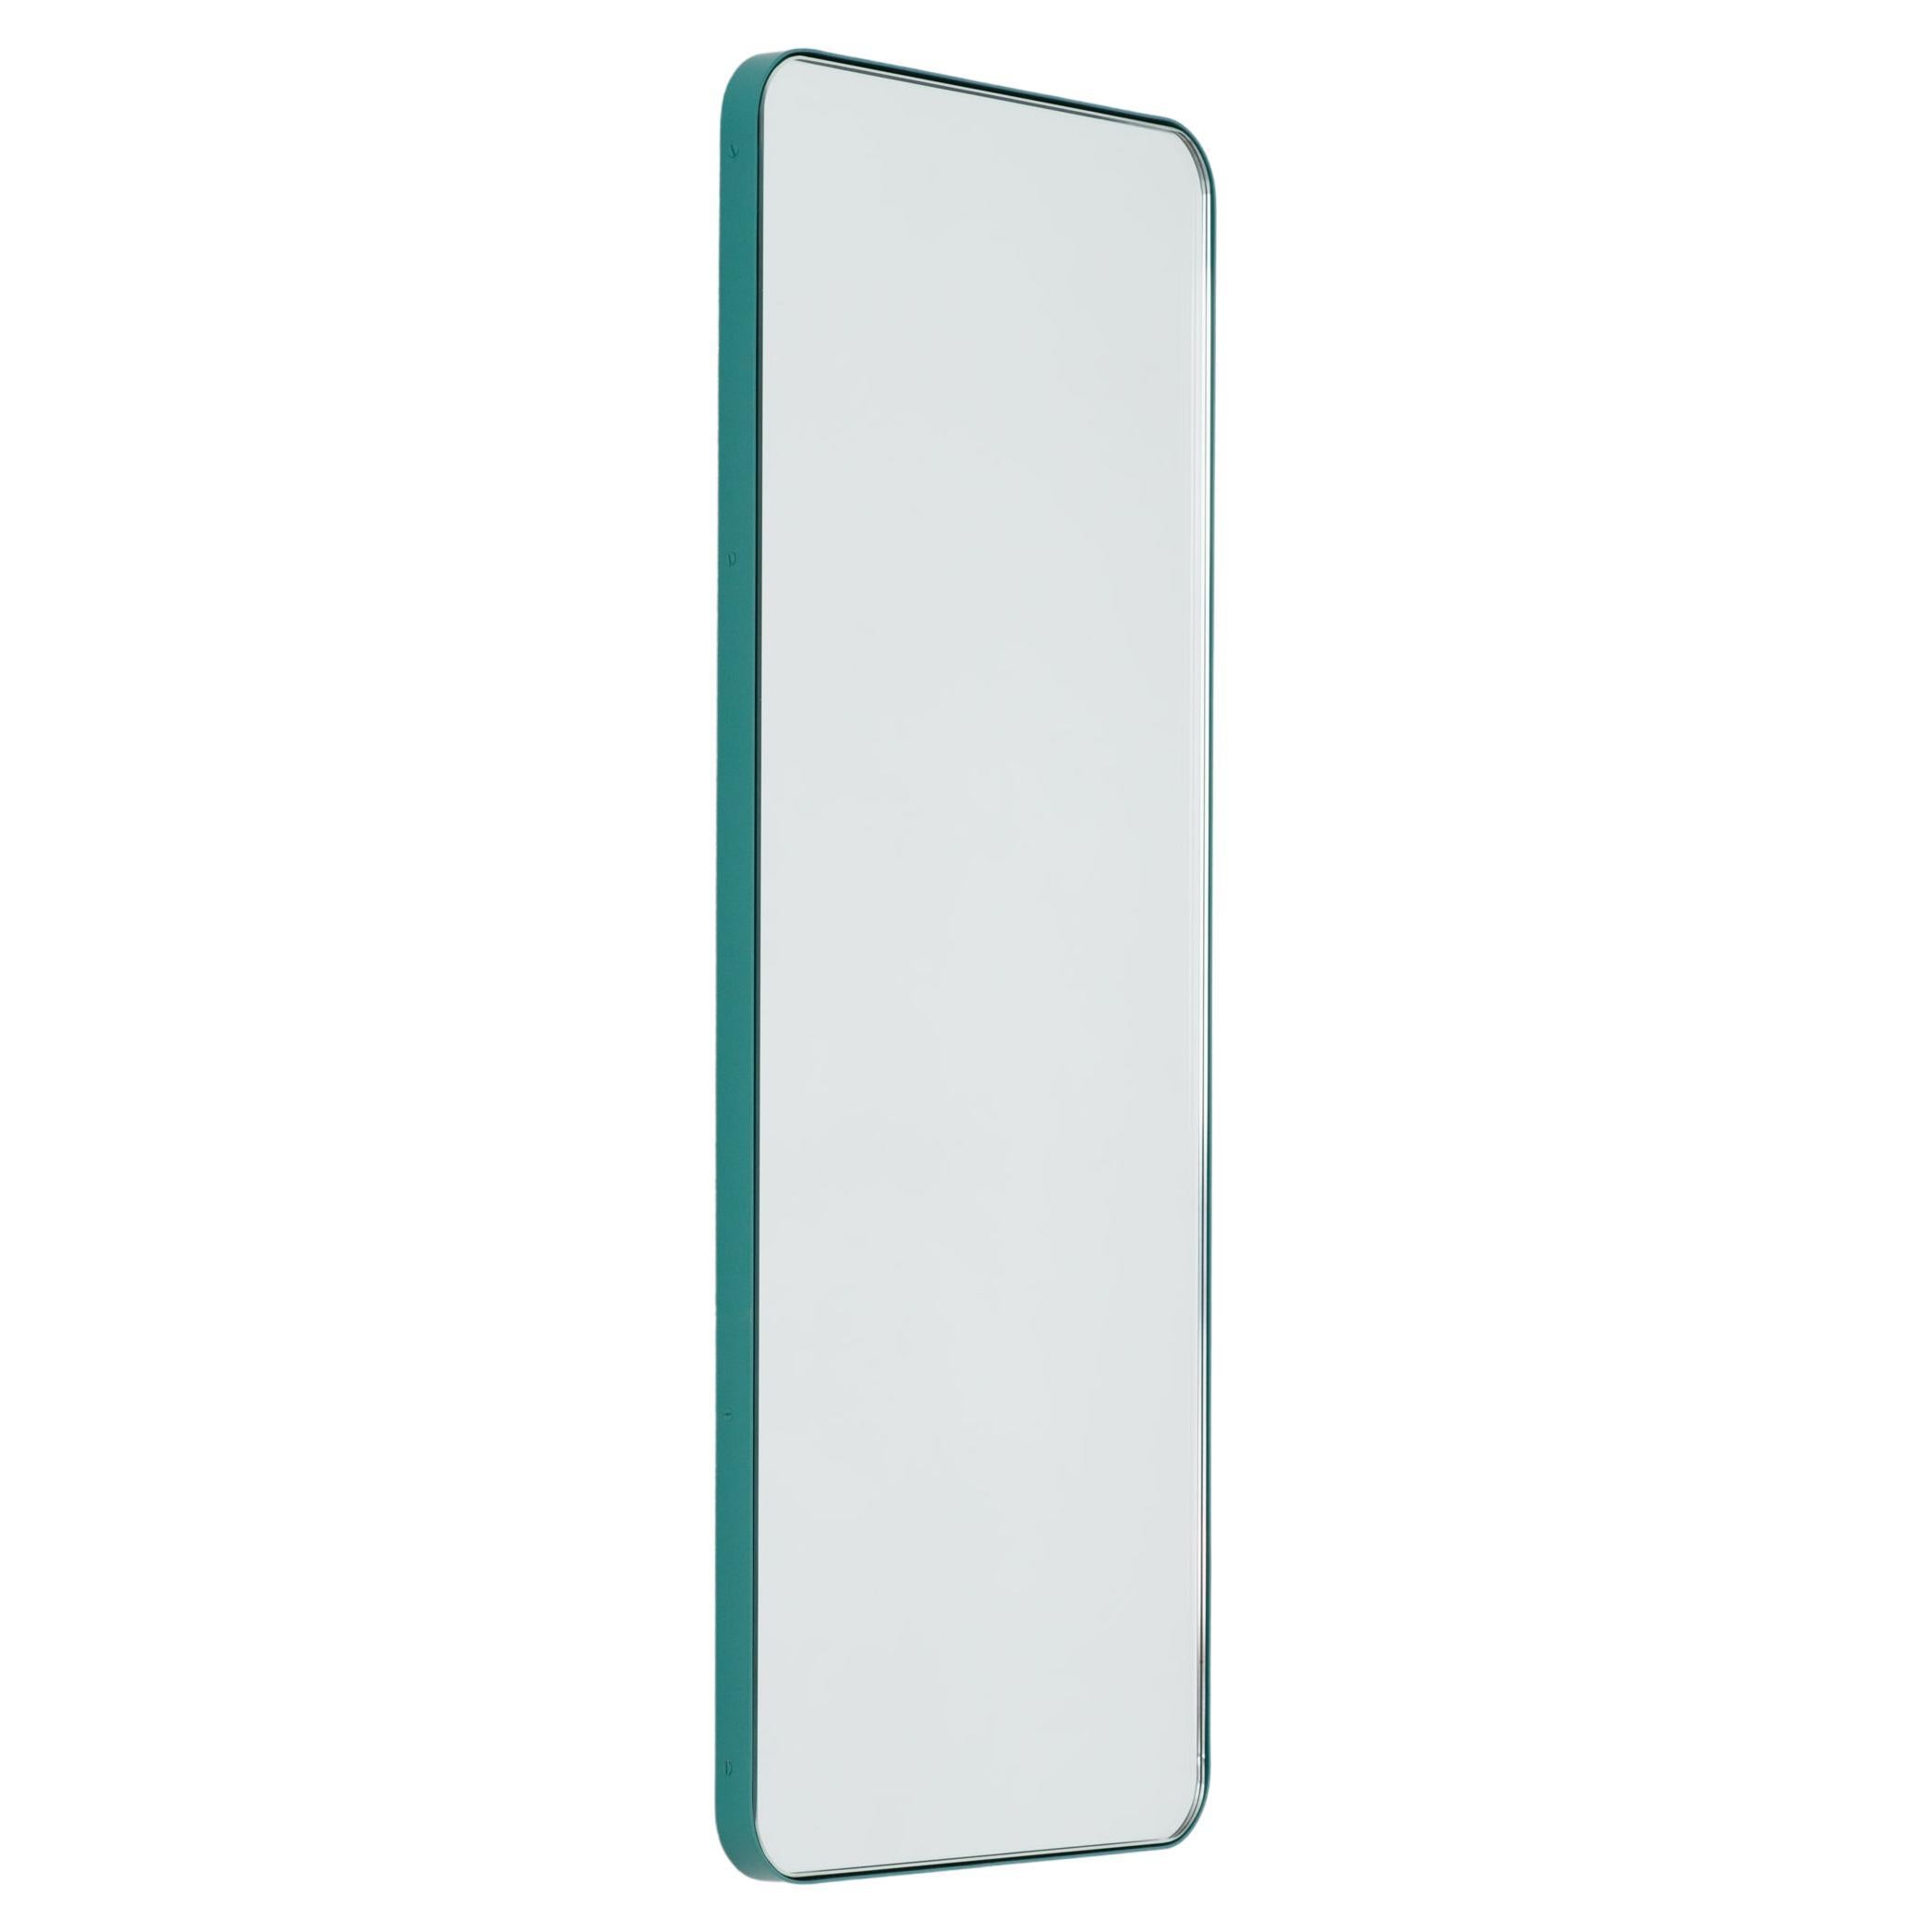 Quadris Rectangular Modern Customisable Mirror with Mint Turquoise Frame, Medium